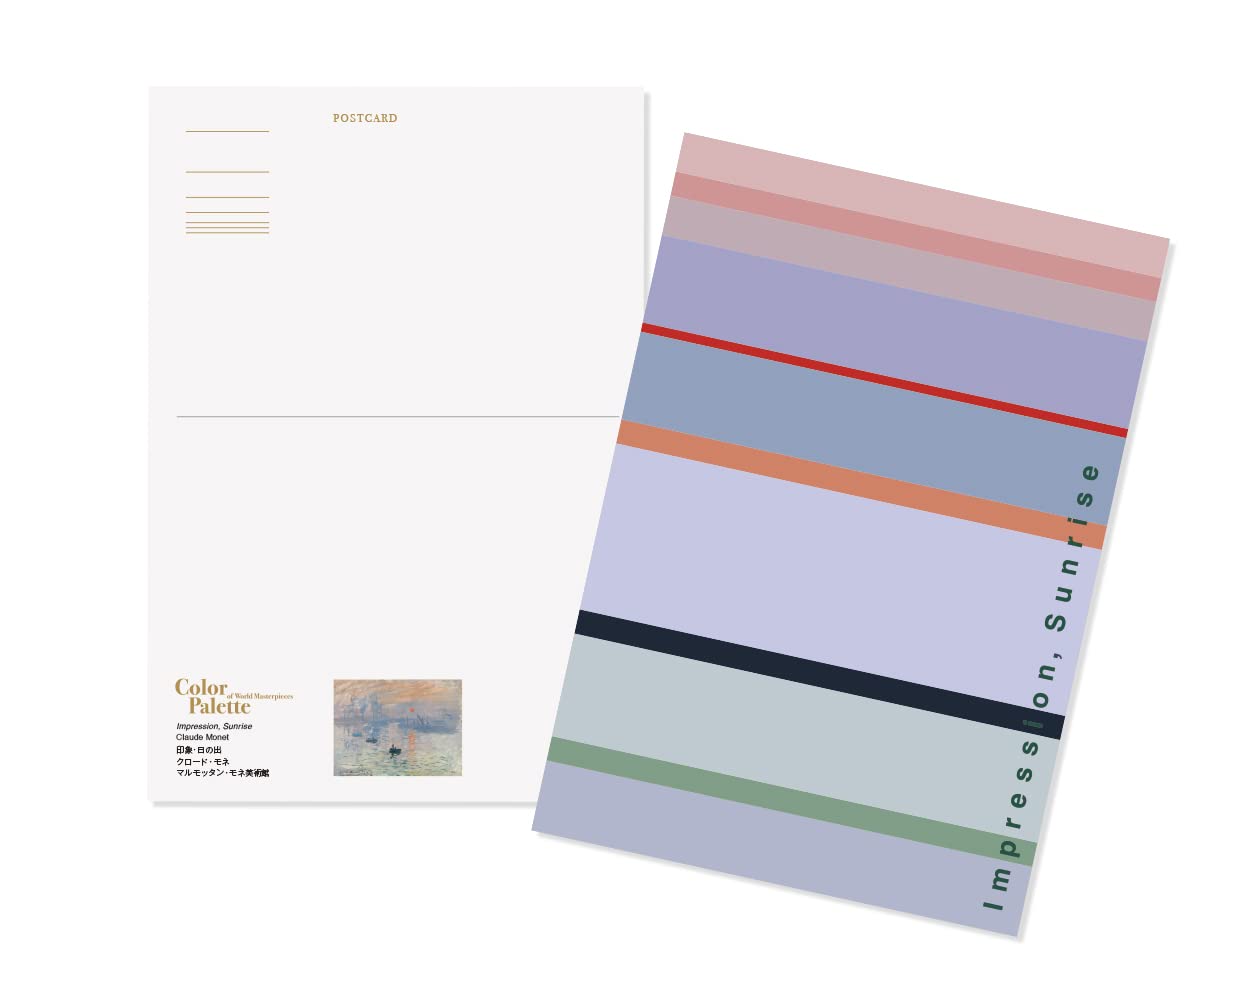 Color Palette of World Masterpieces Postcards